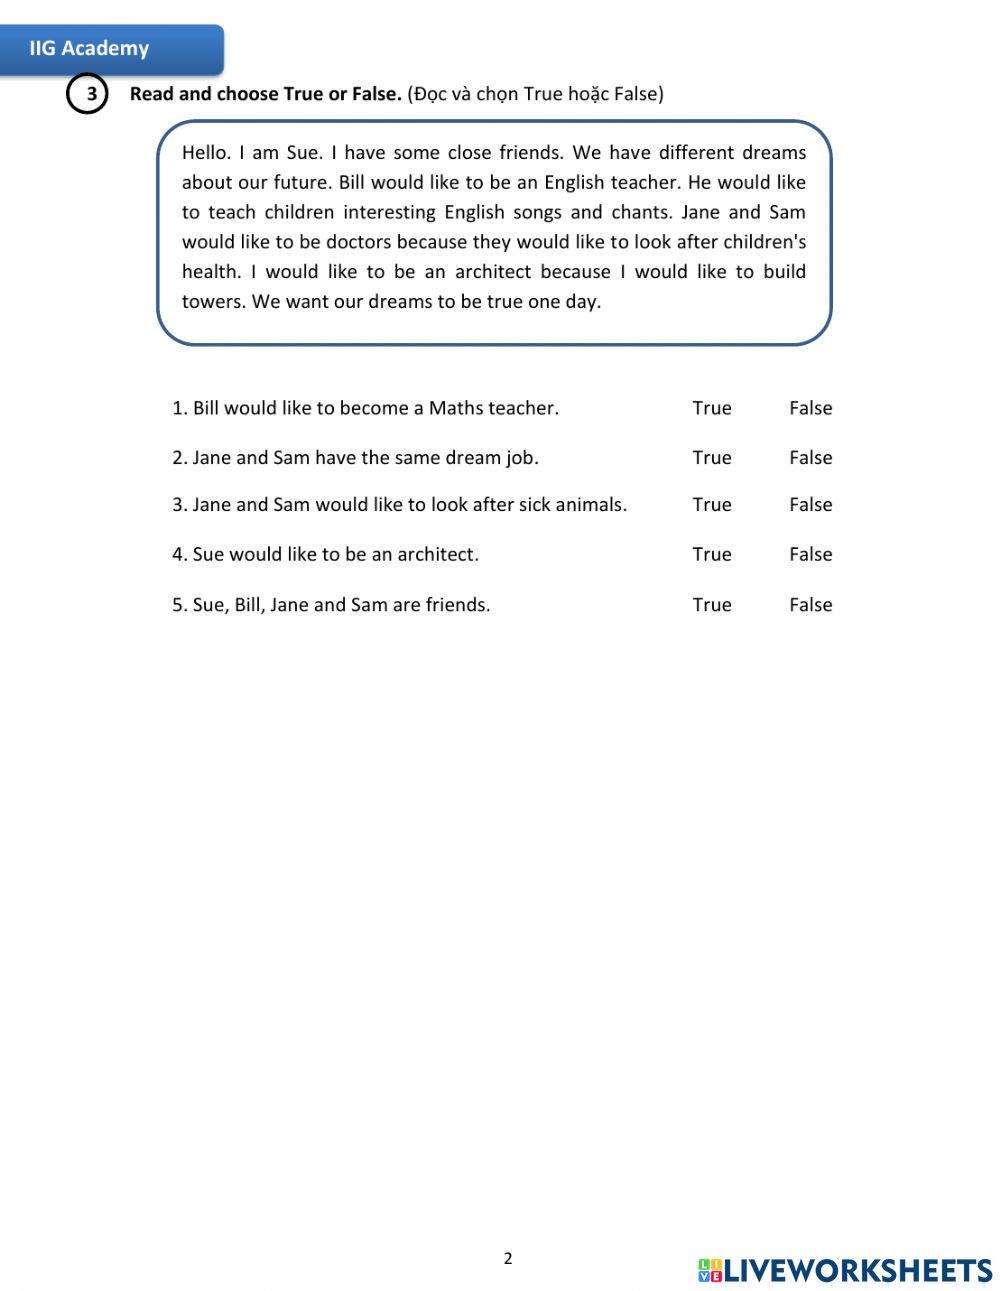 IIG-Grade 5-Worksheet 27